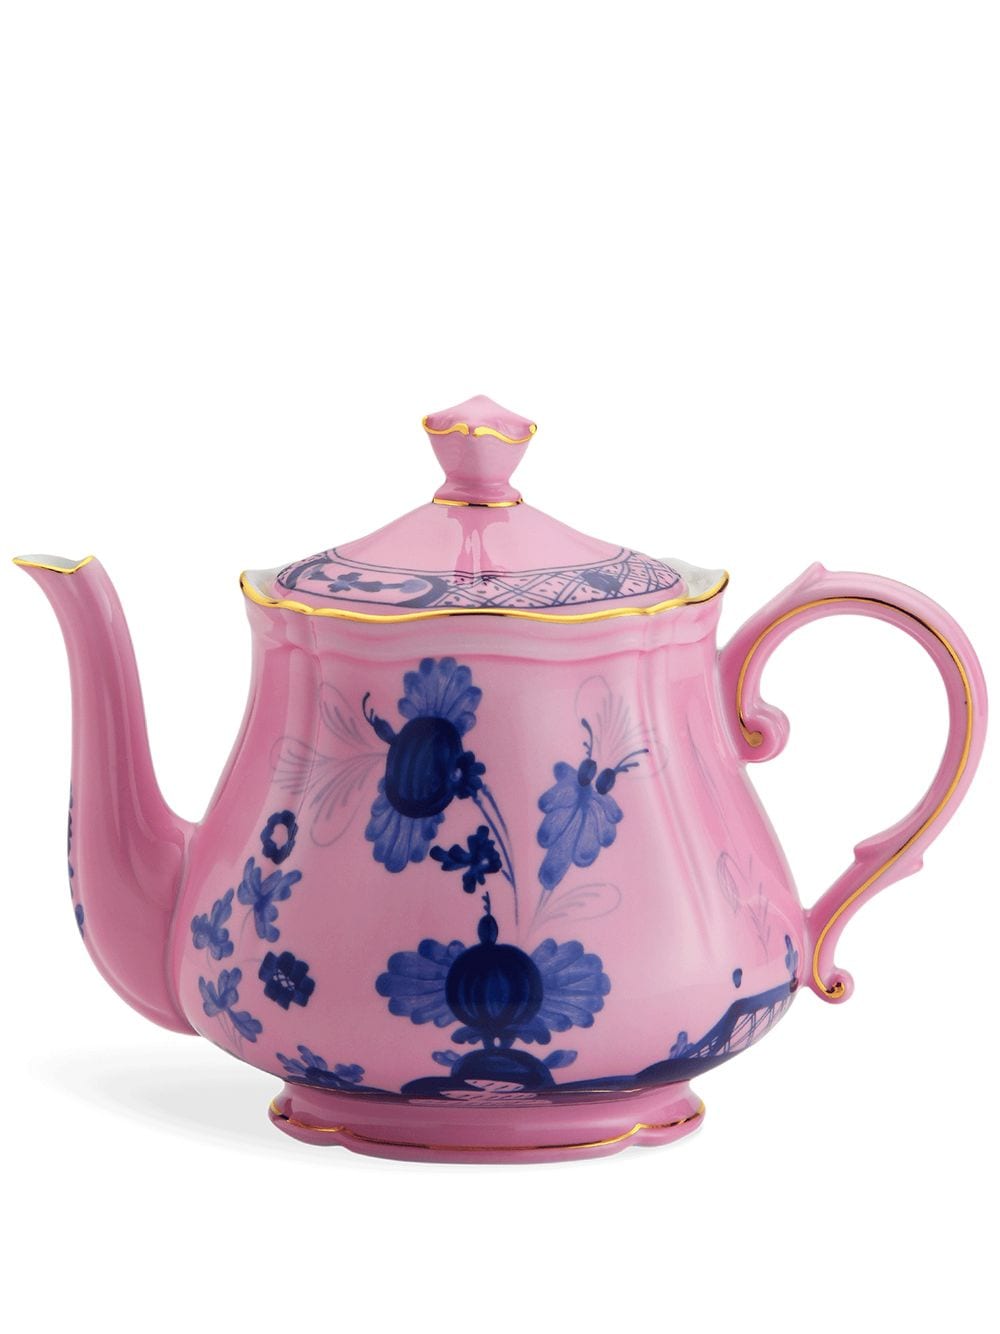 GINORI 1735 Oriente Italiano porcelain teapot - Pink von GINORI 1735